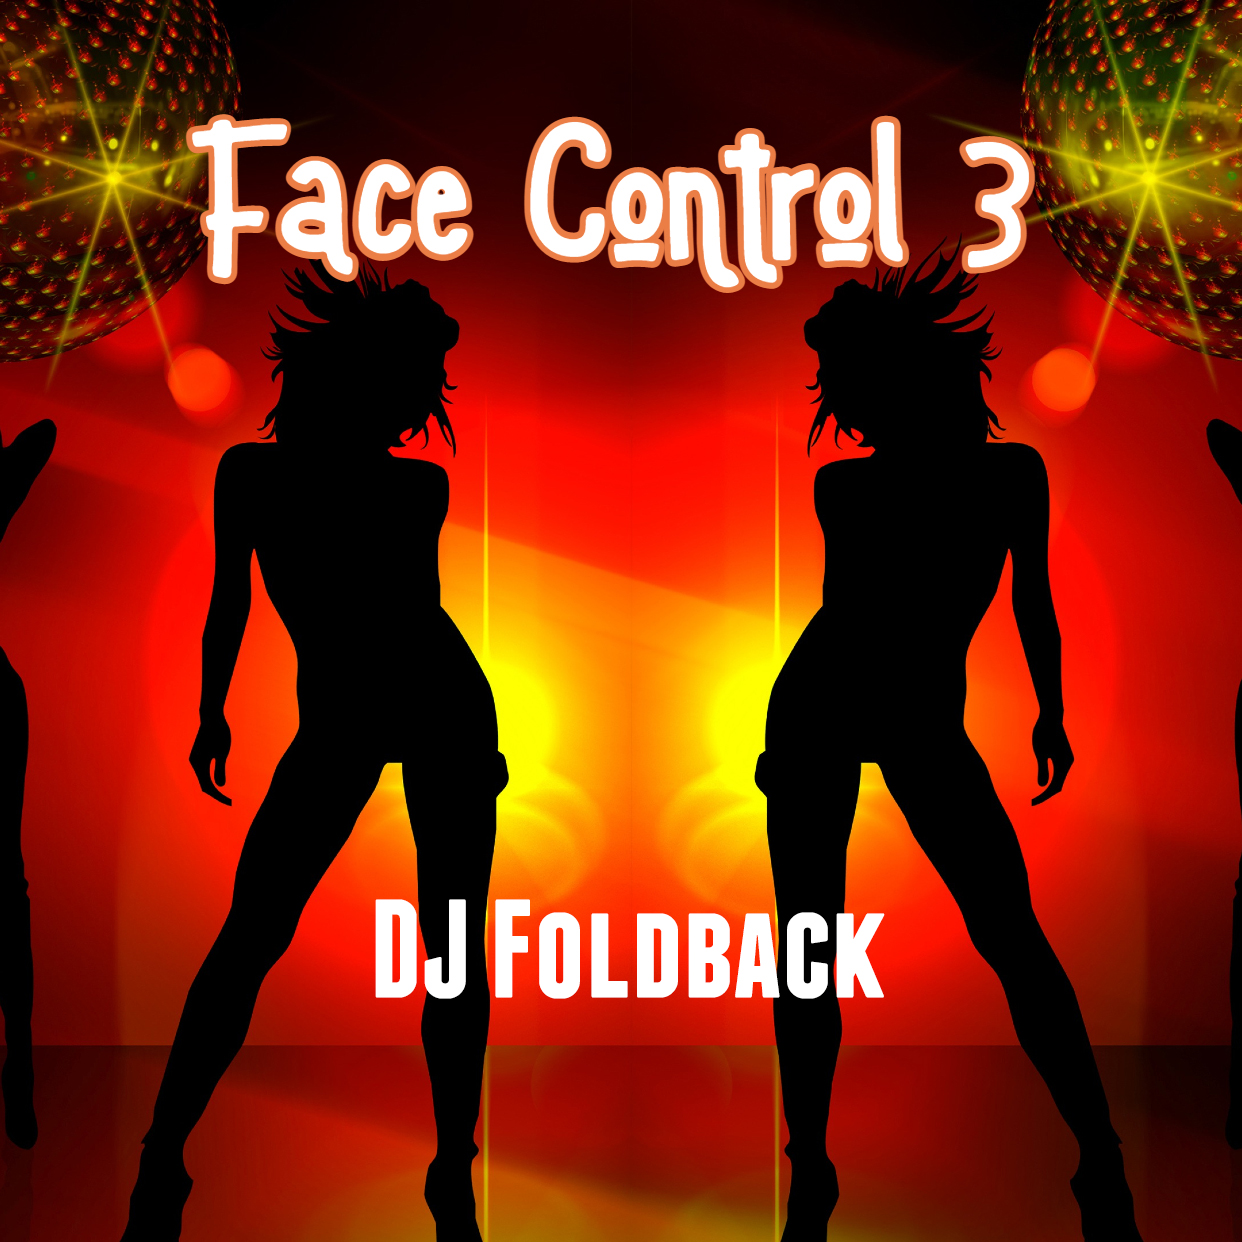 DJ Foldback - Face Control 3